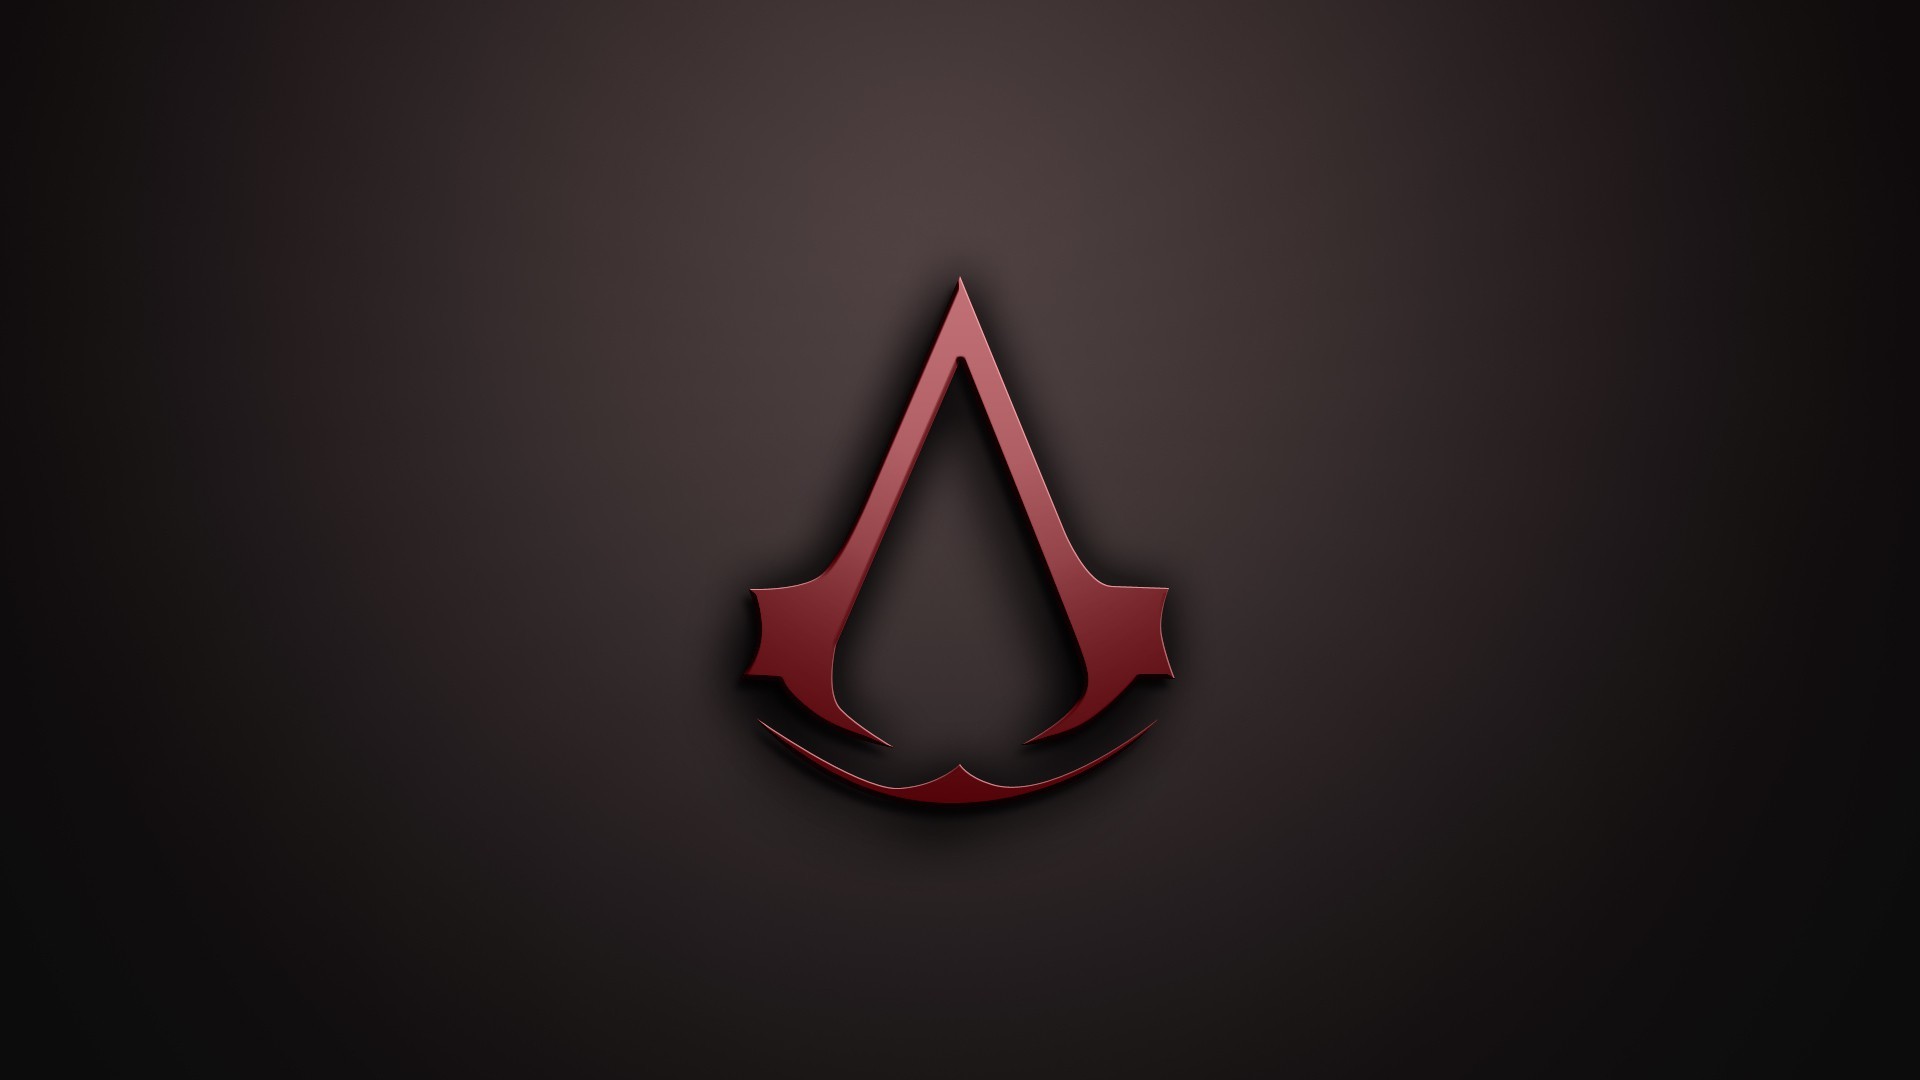 1920x1080 Assassin's Creed logo wallpaper